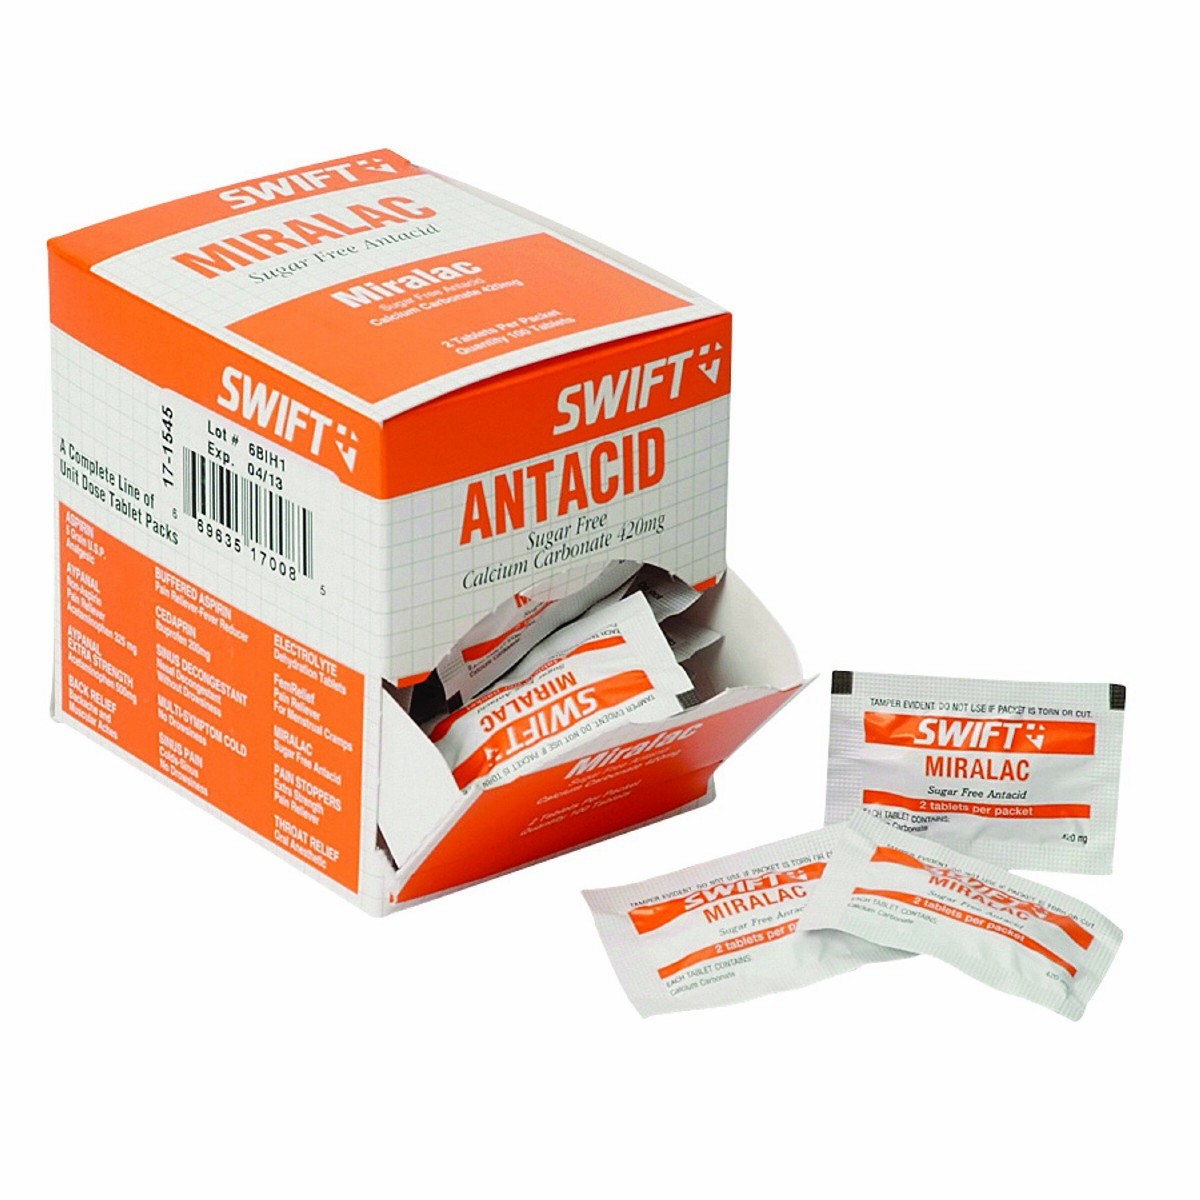 Honeywell Miralac Antacid Indigestion Tablets (2 Per Pack, 50 Packs Per Box)